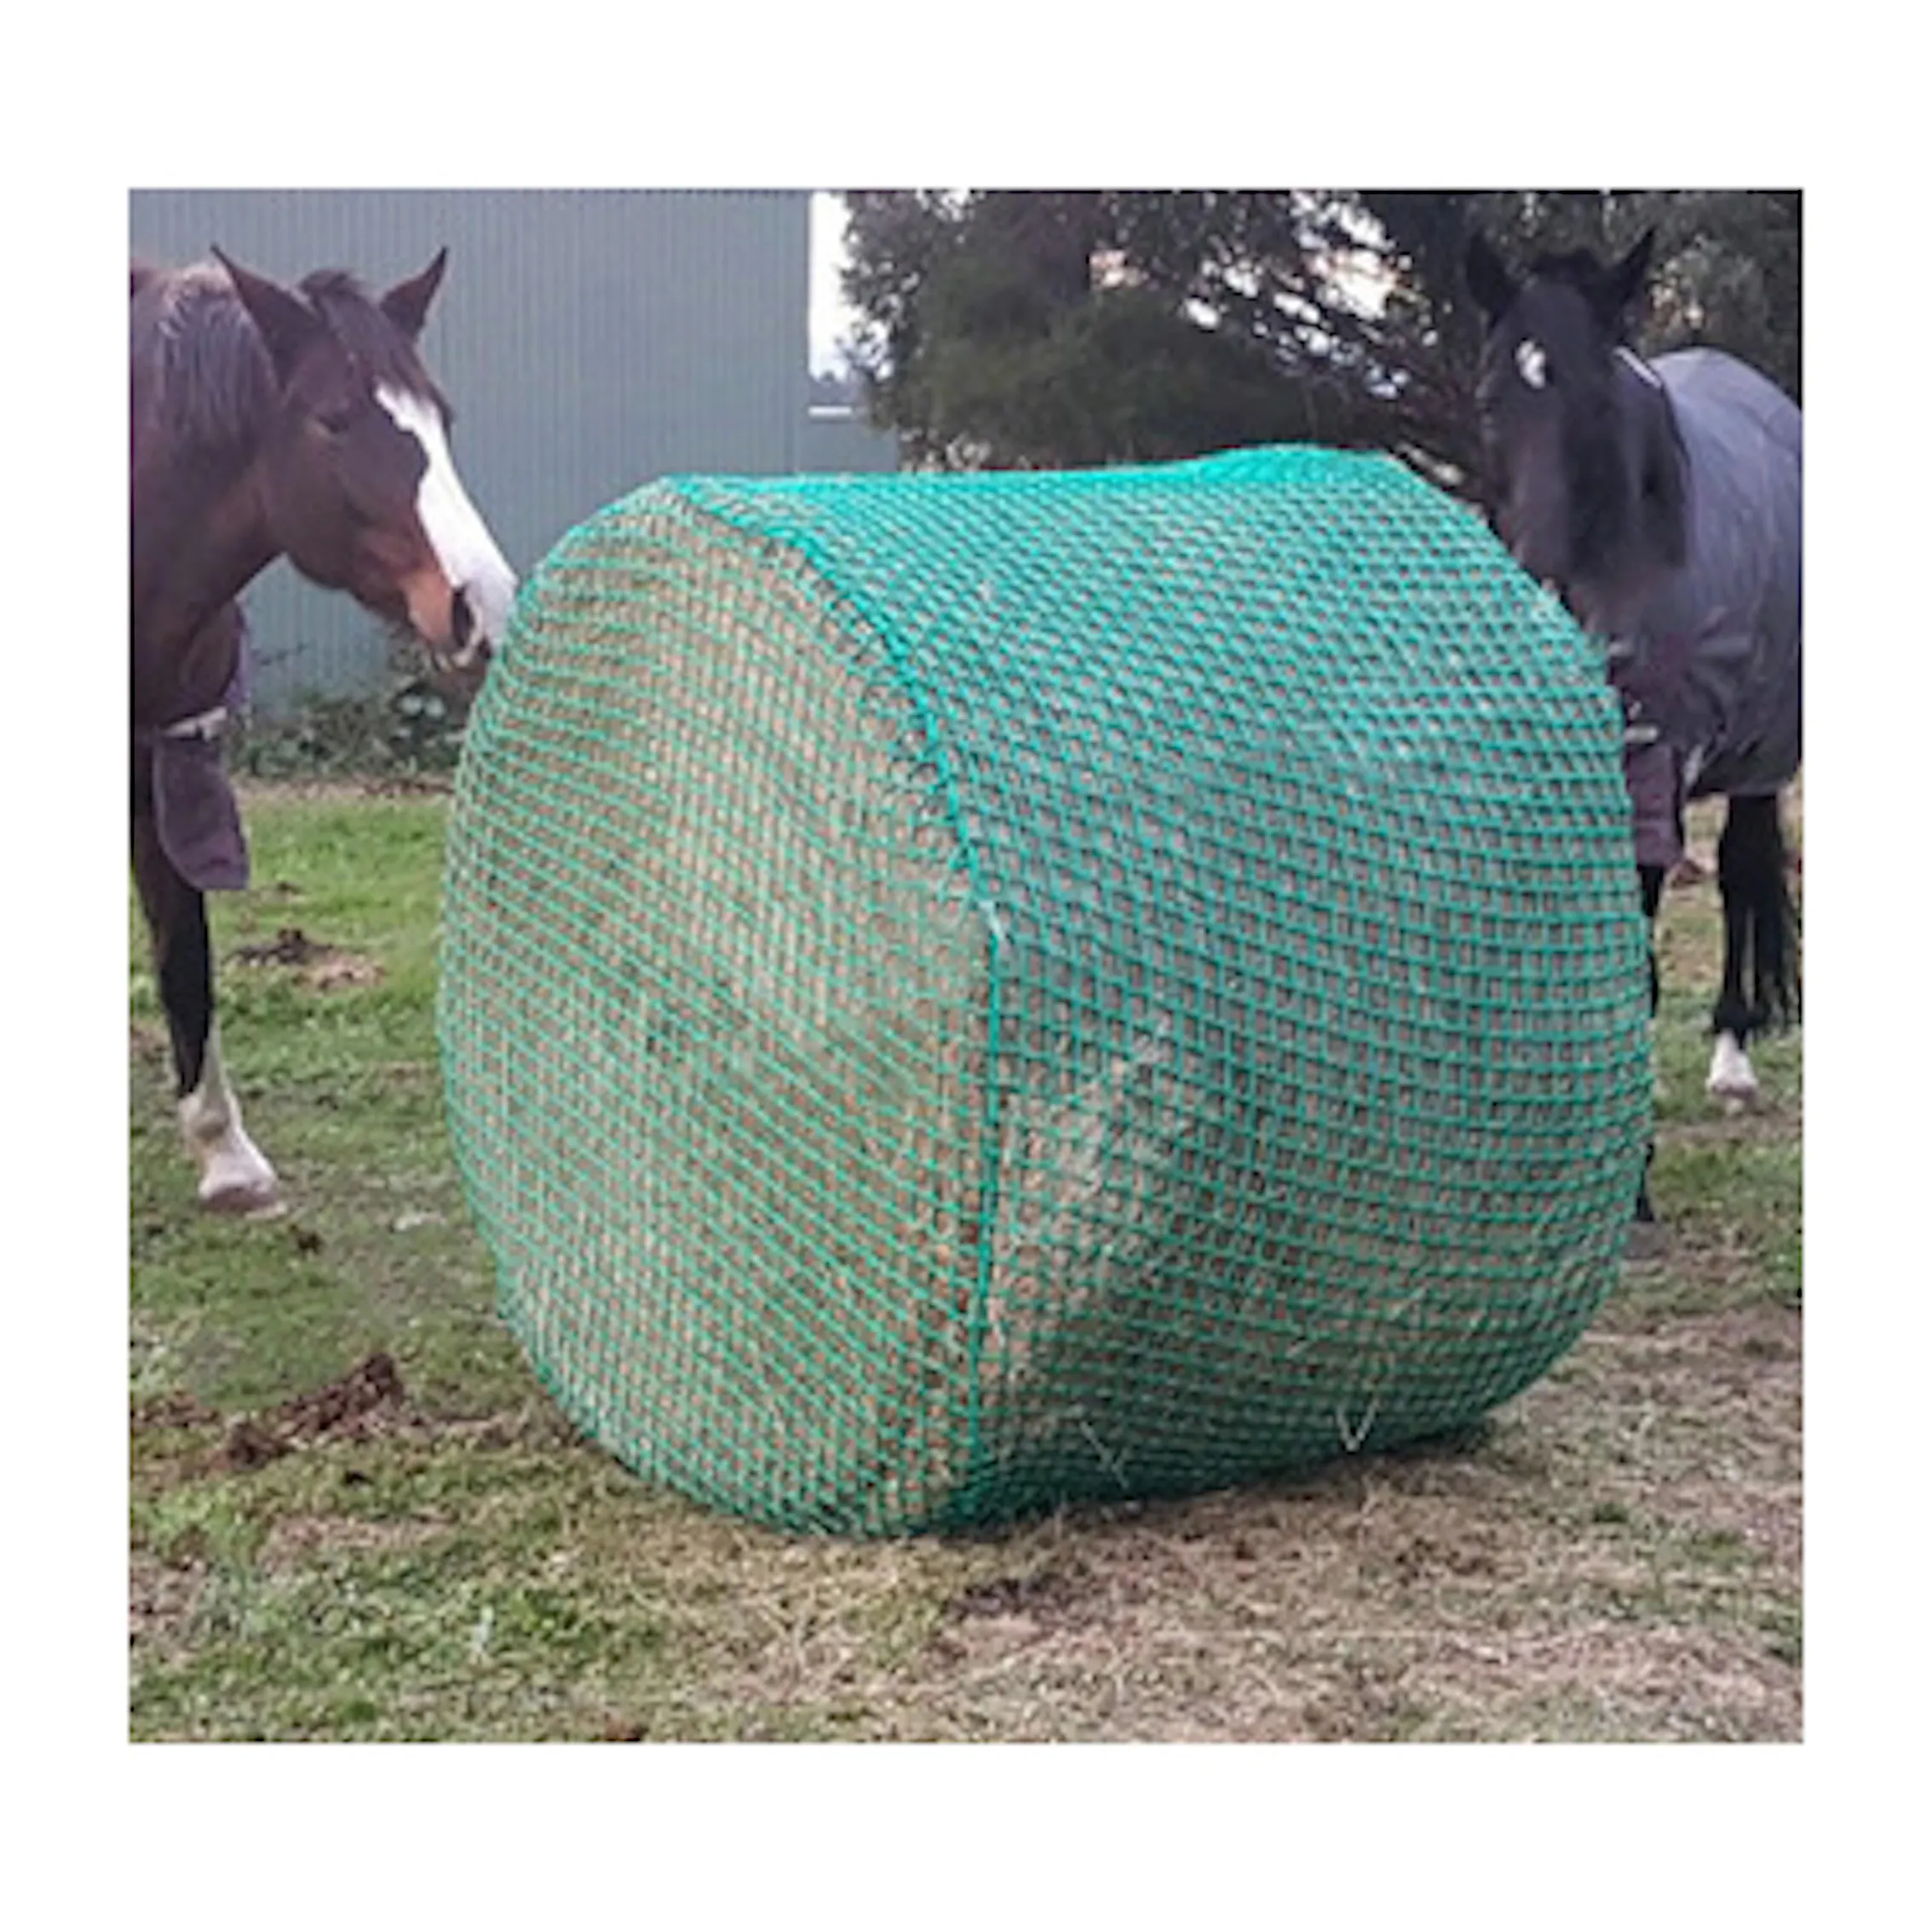 Harga Pabrik Hay Nets untuk Kuda Besar Bale Hay Kuda Feeder Lambat Bersih Shenzhen Ningbo Hay Nets untuk Kuda